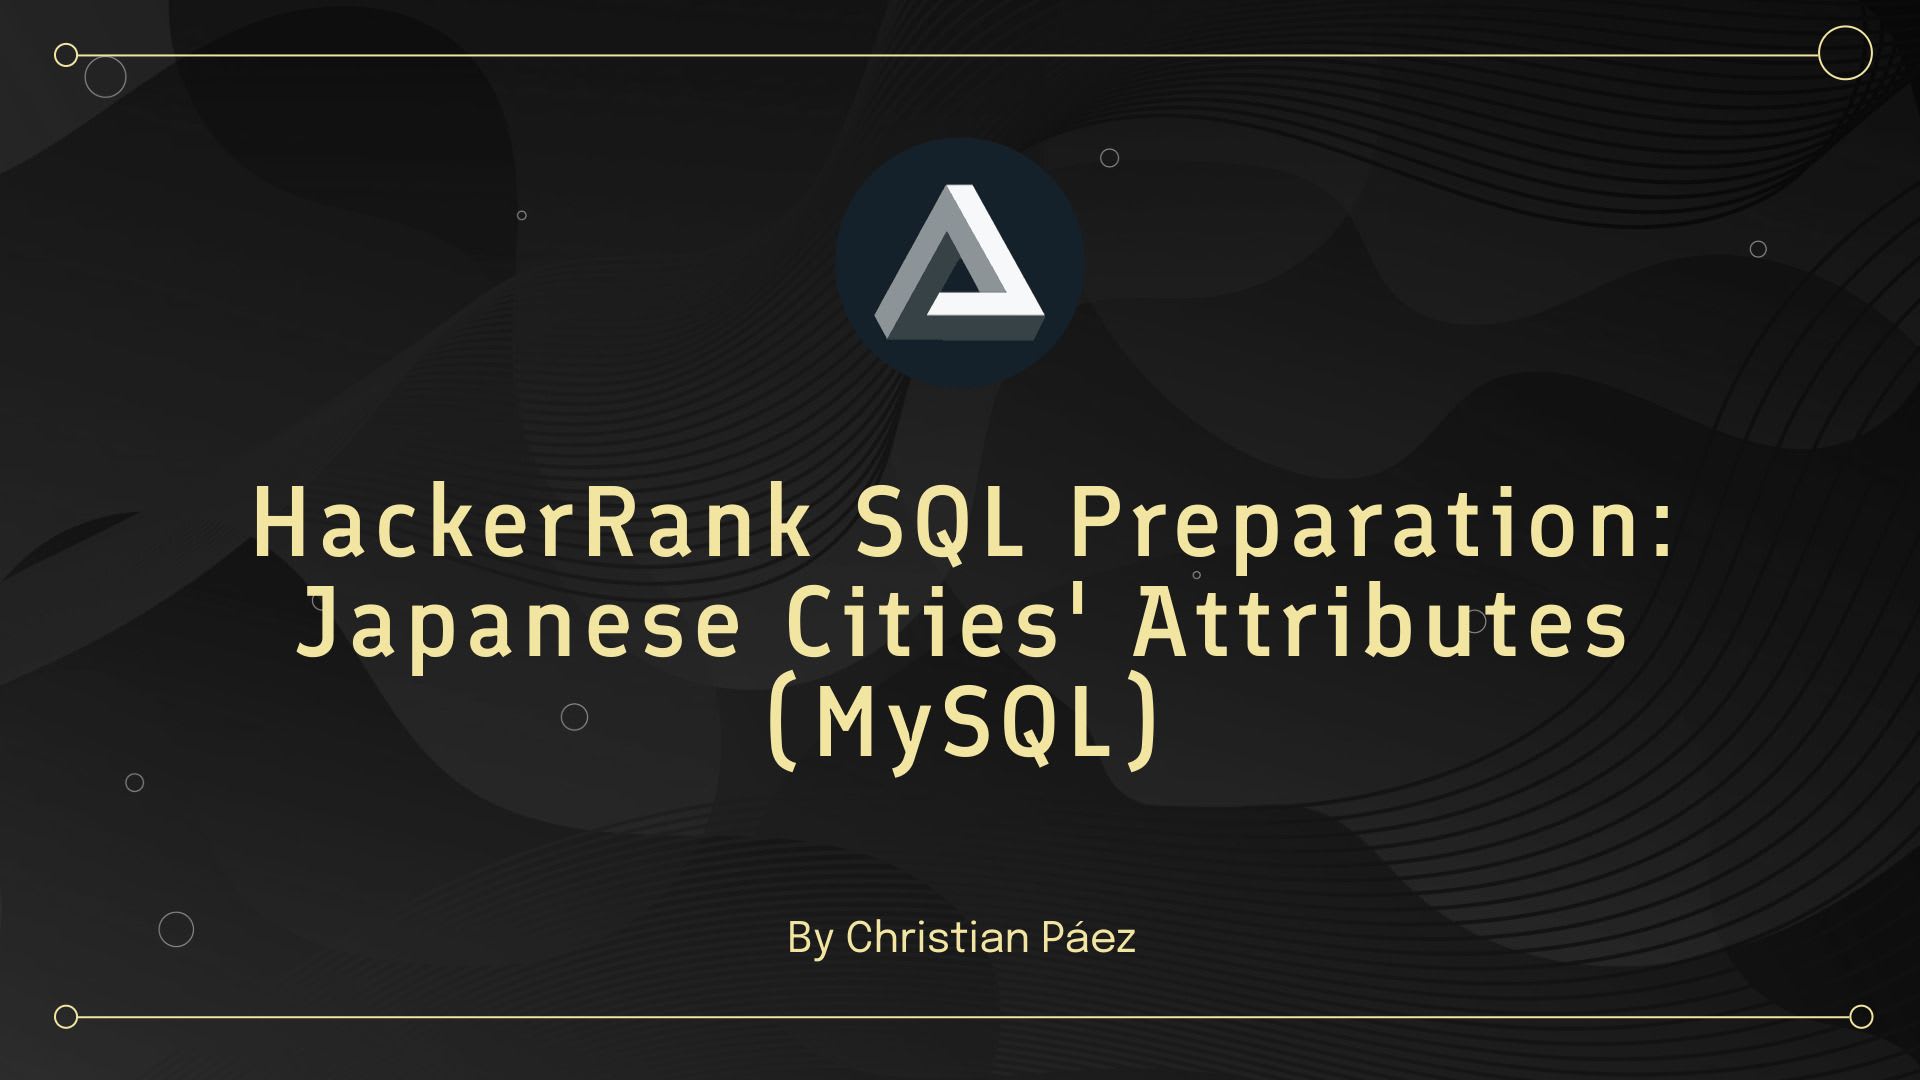 HackerRank SQL Preparation: Japanese Cities' Attributes(MySQL)